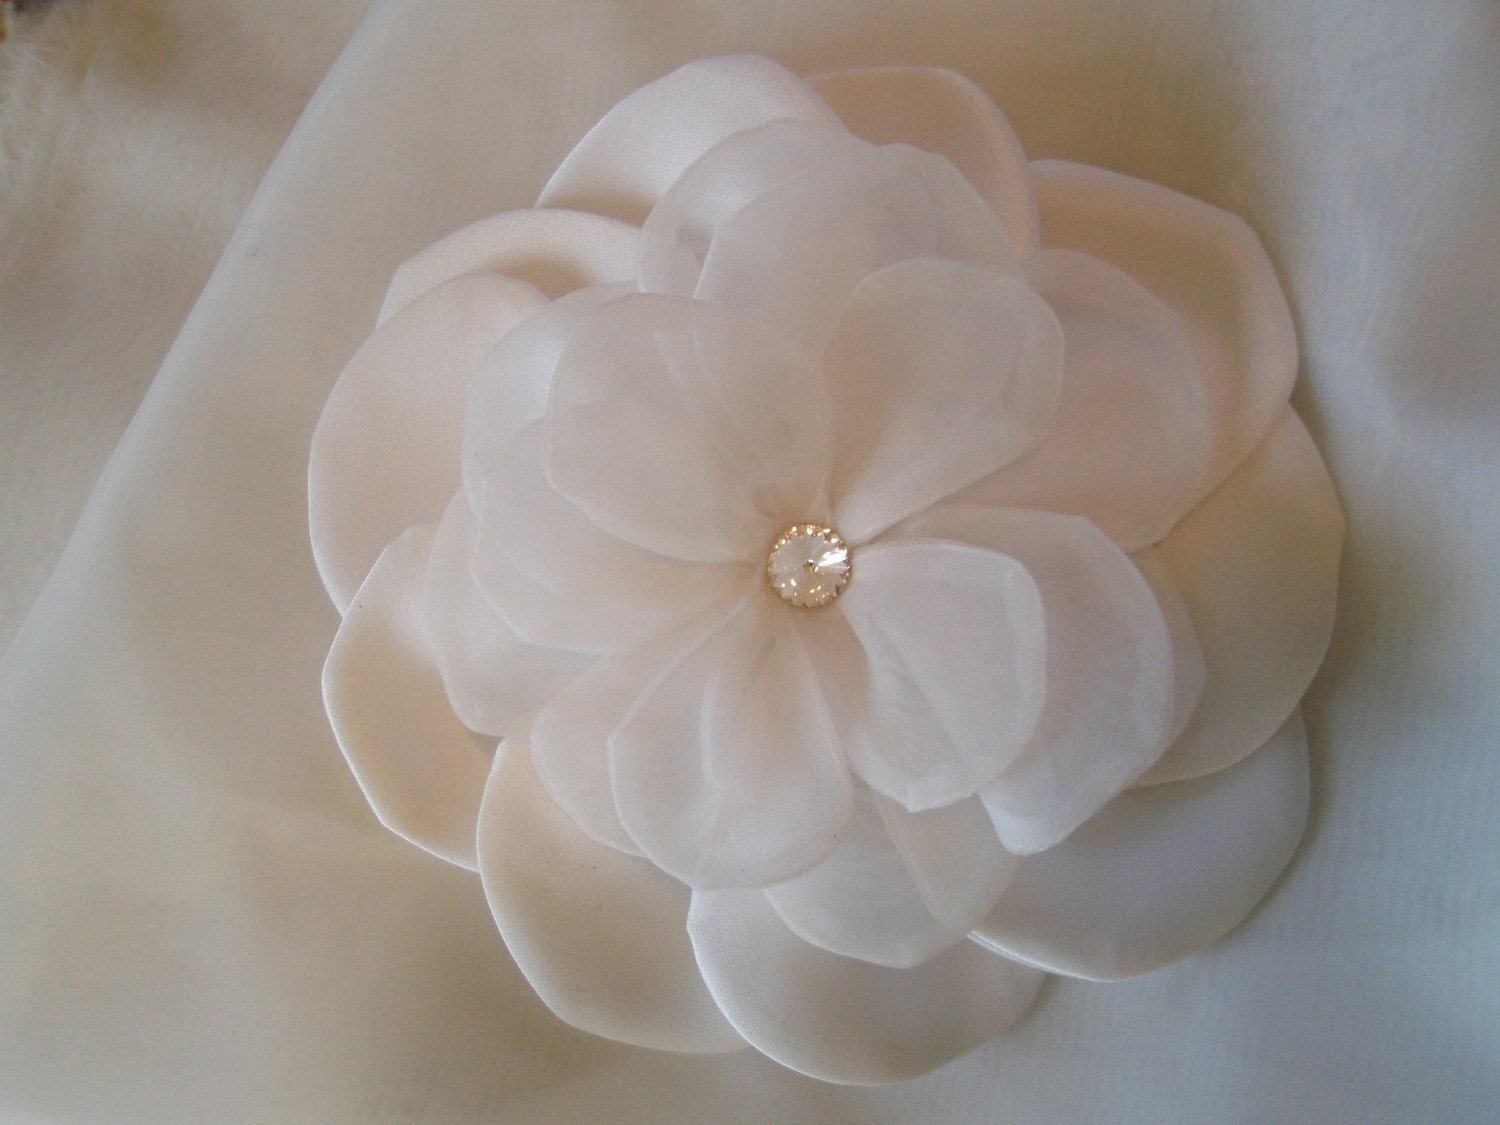 Stunning Large White Bridal Peony with Swarvoski Crystal